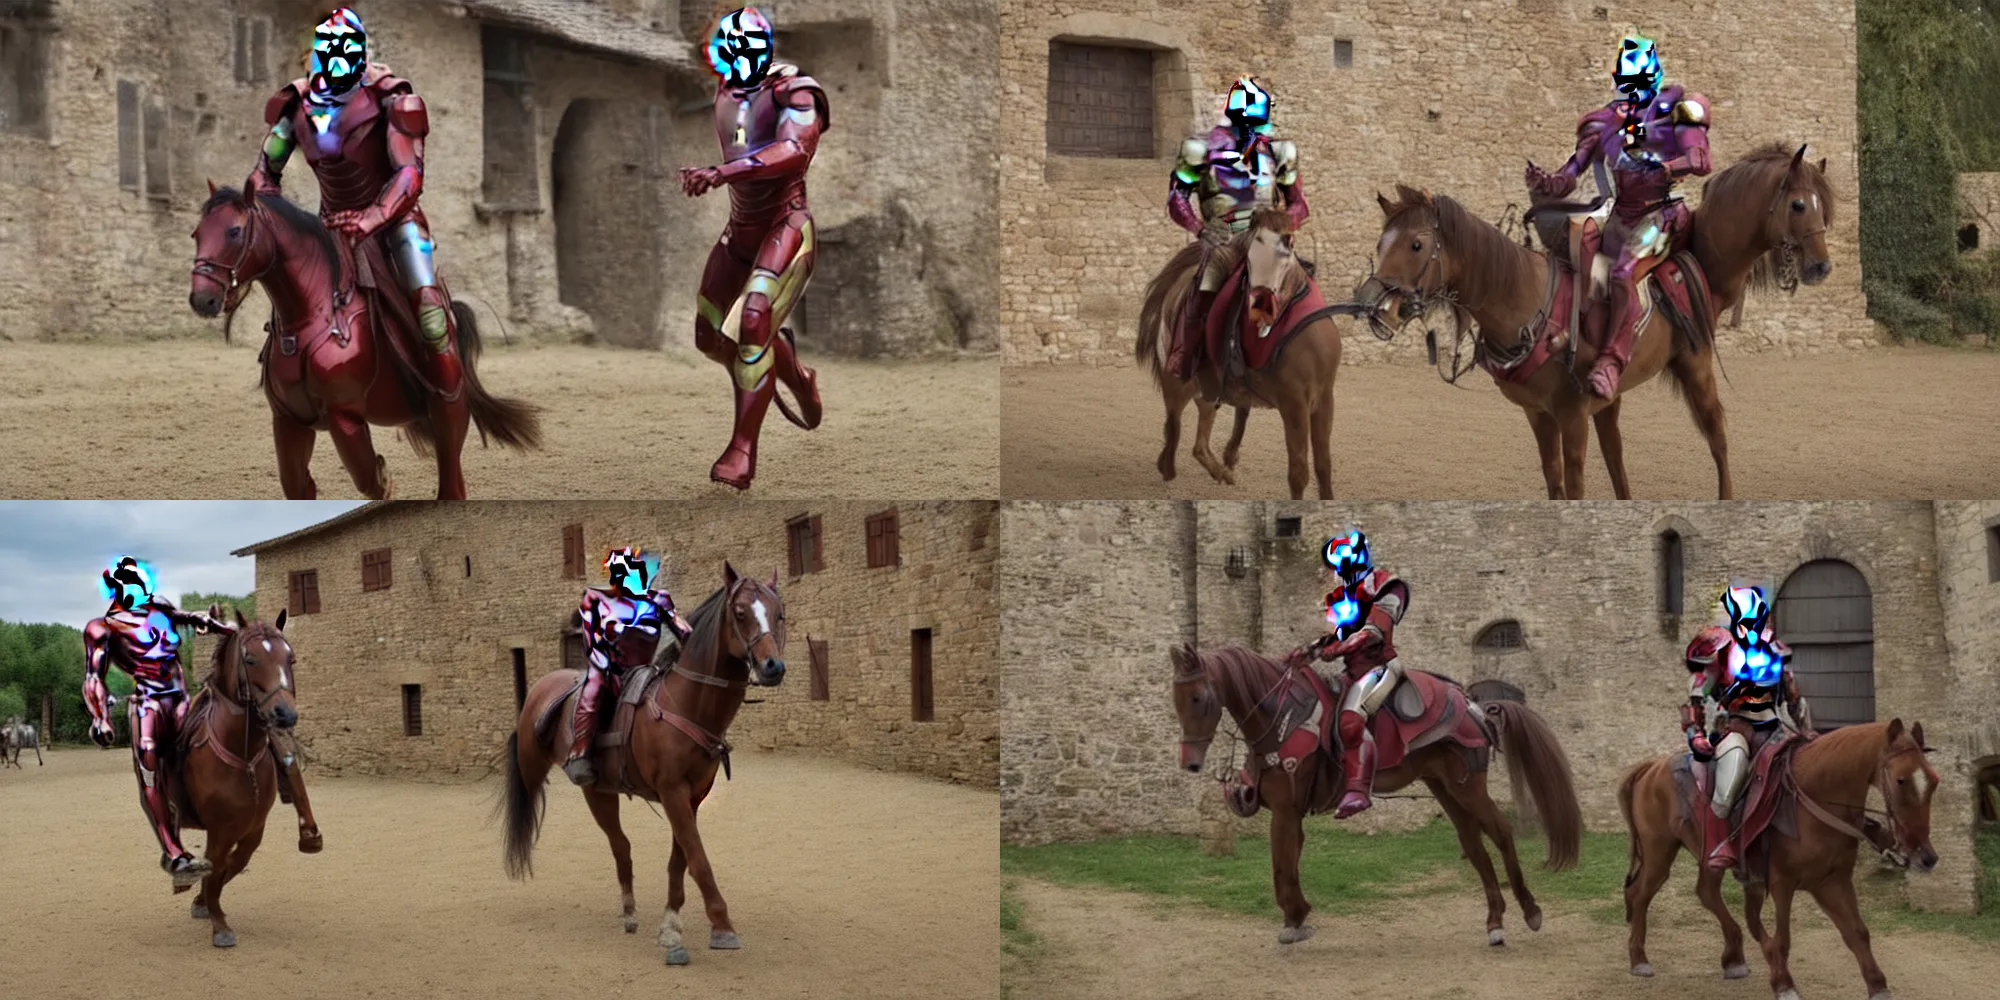 Prompt: Iron Man riding a horse through a medieval village